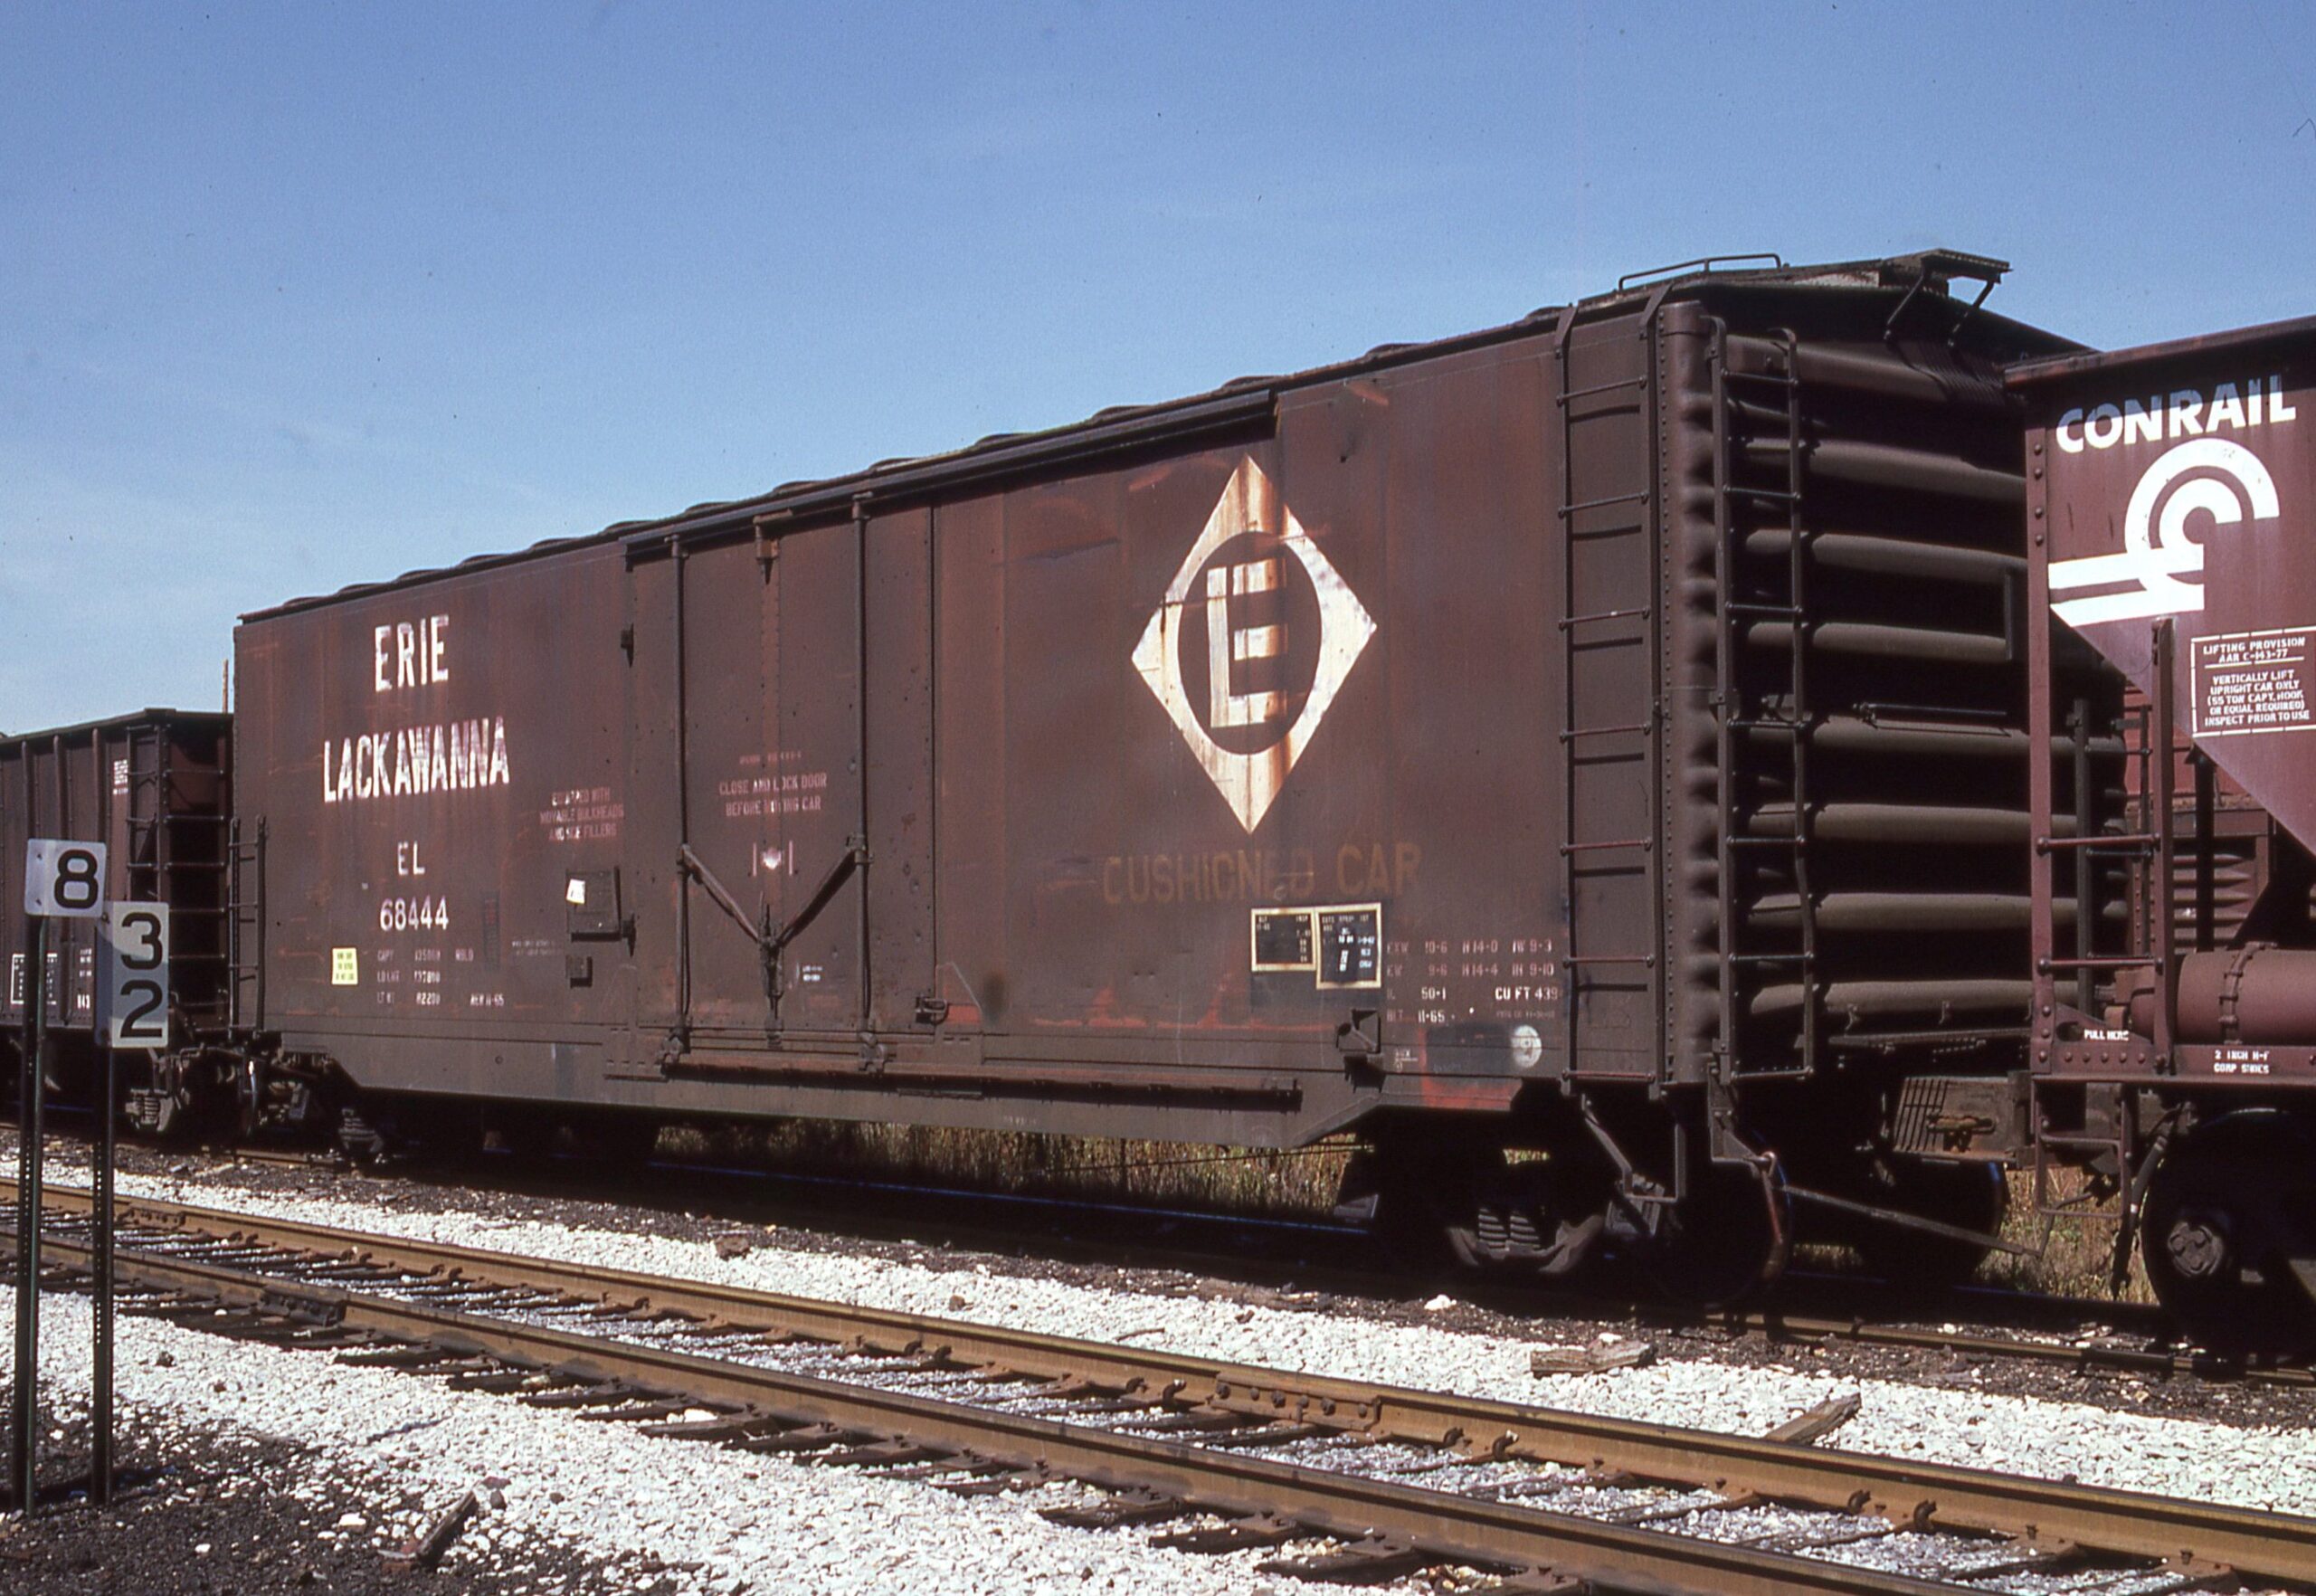 Erie Lackawanna Railway | Hollidaysburg, Pennsylvania | Box car #EL684444 | December 1985 | Preston Cook photograph | Steve Timko collection